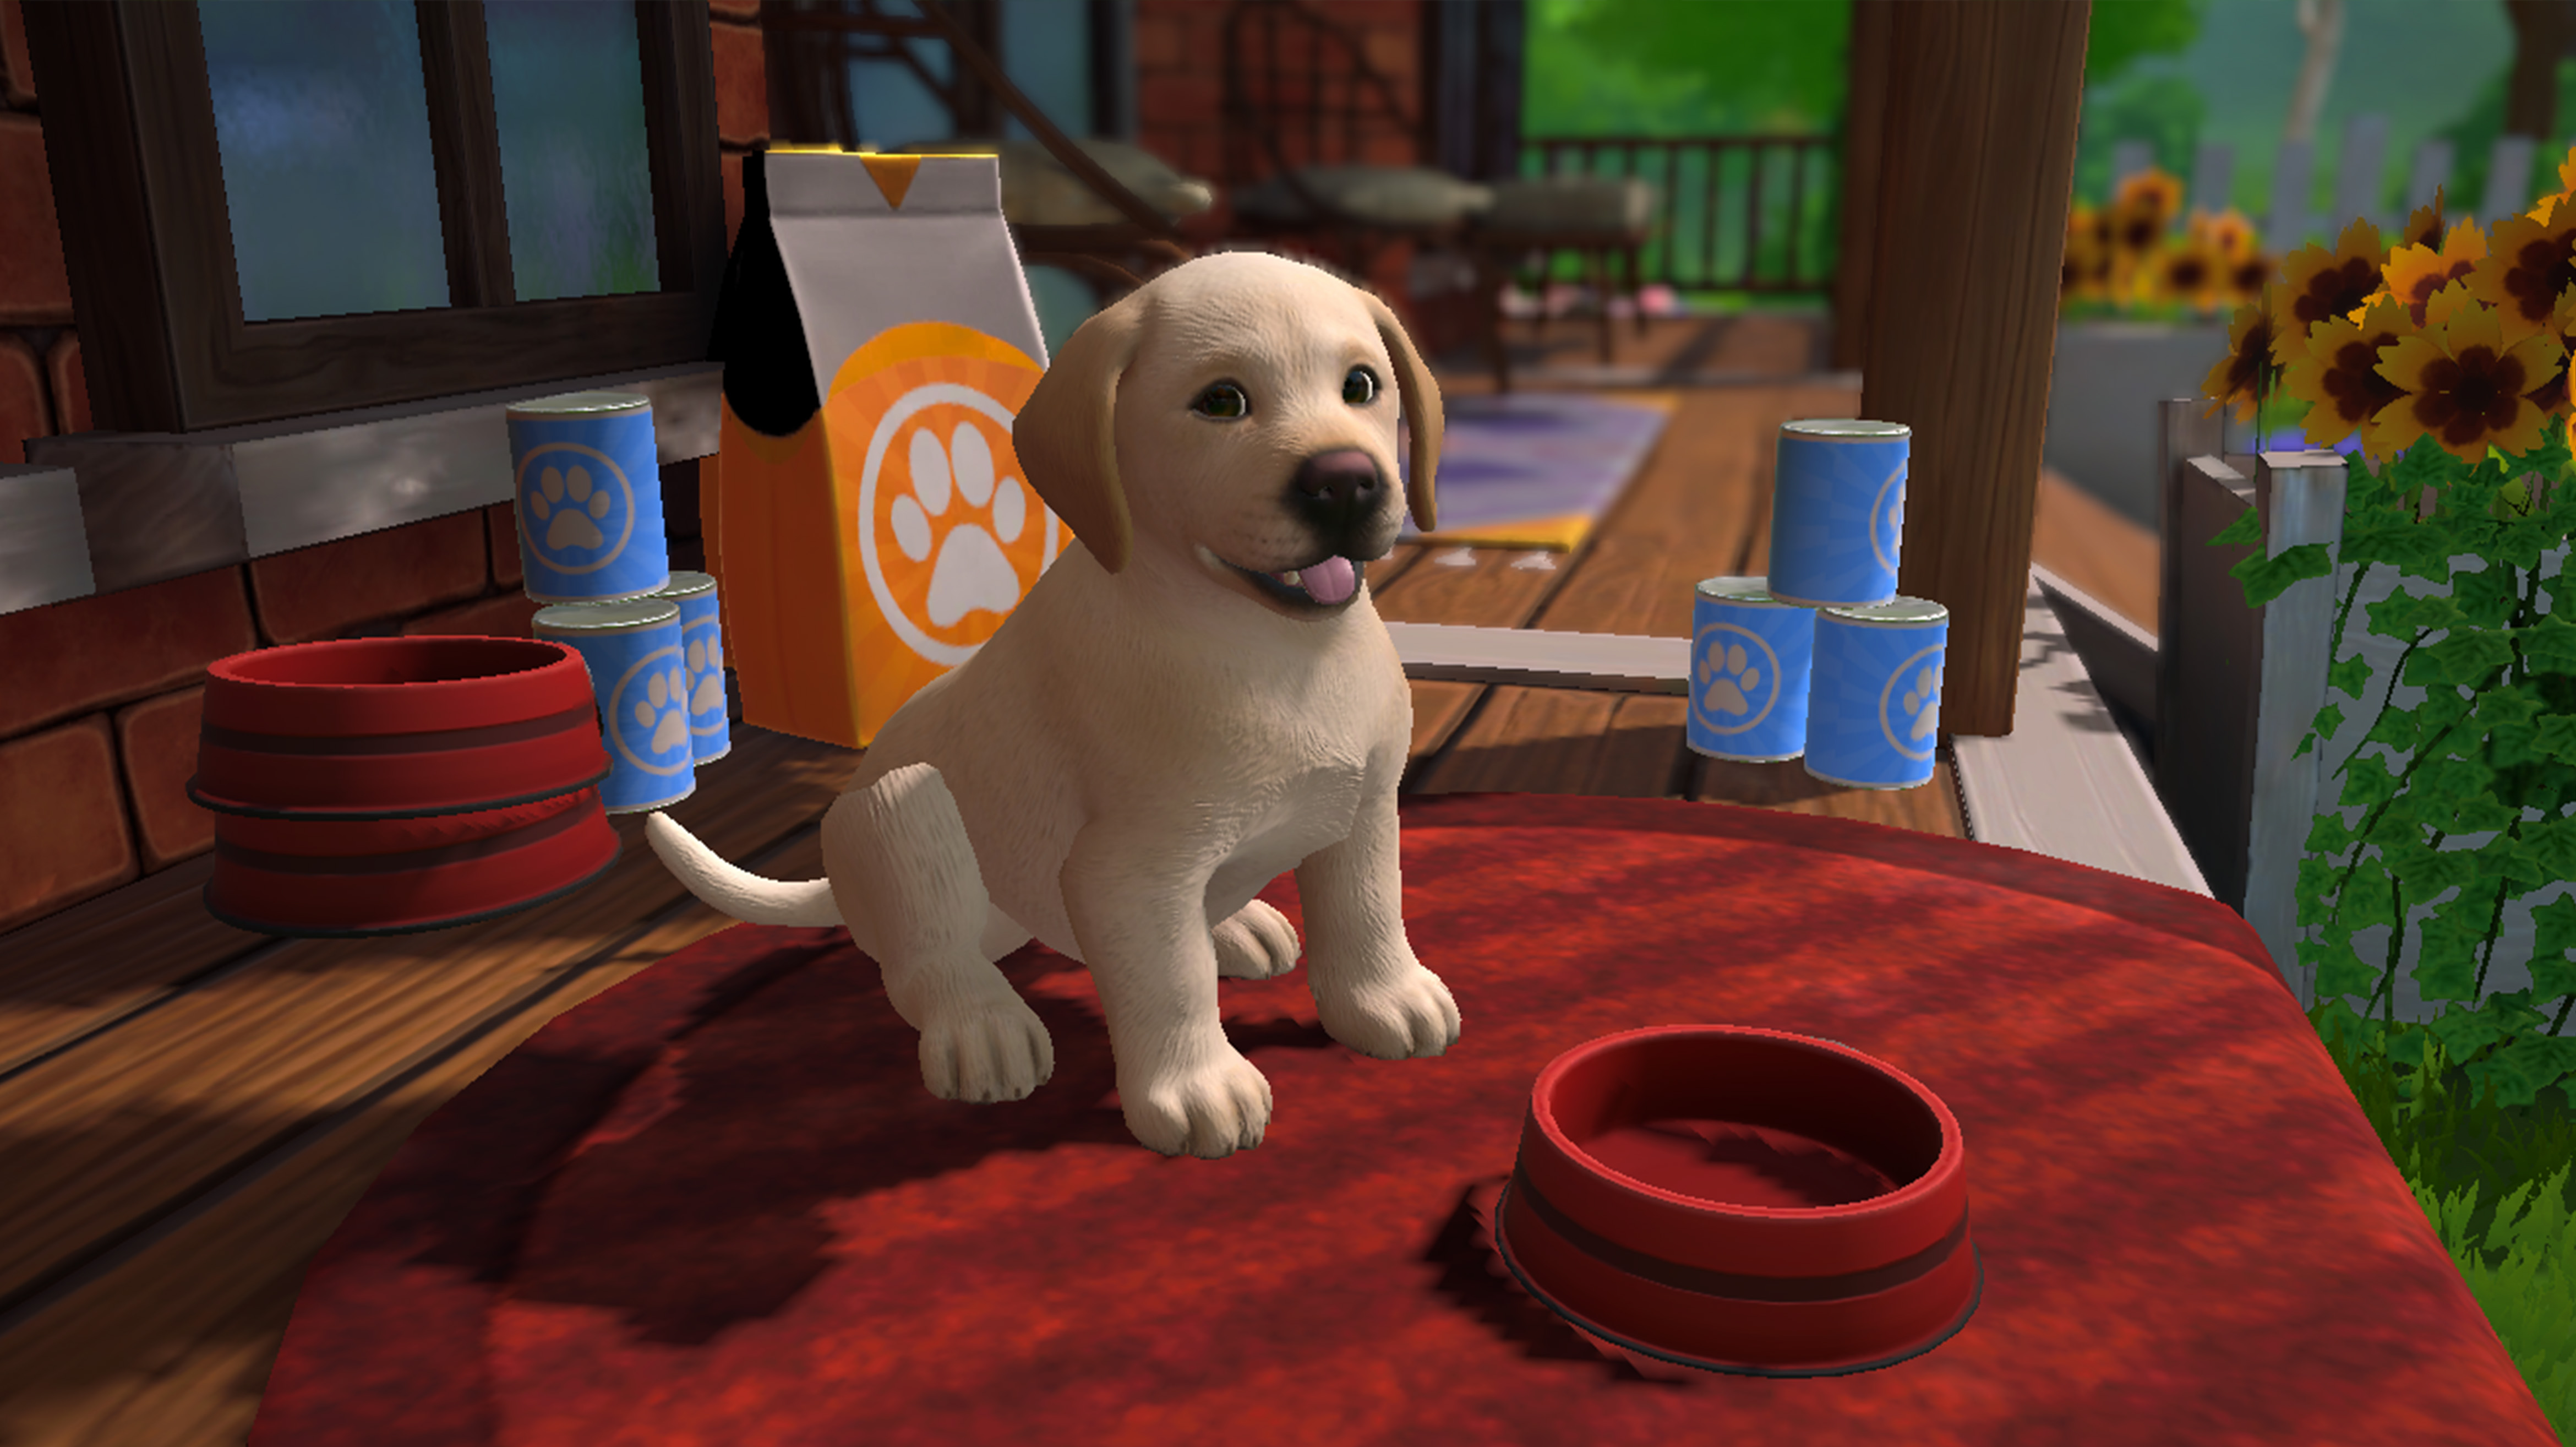 Little Friends: Puppy Island (Multi-Language) for Nintendo Switch